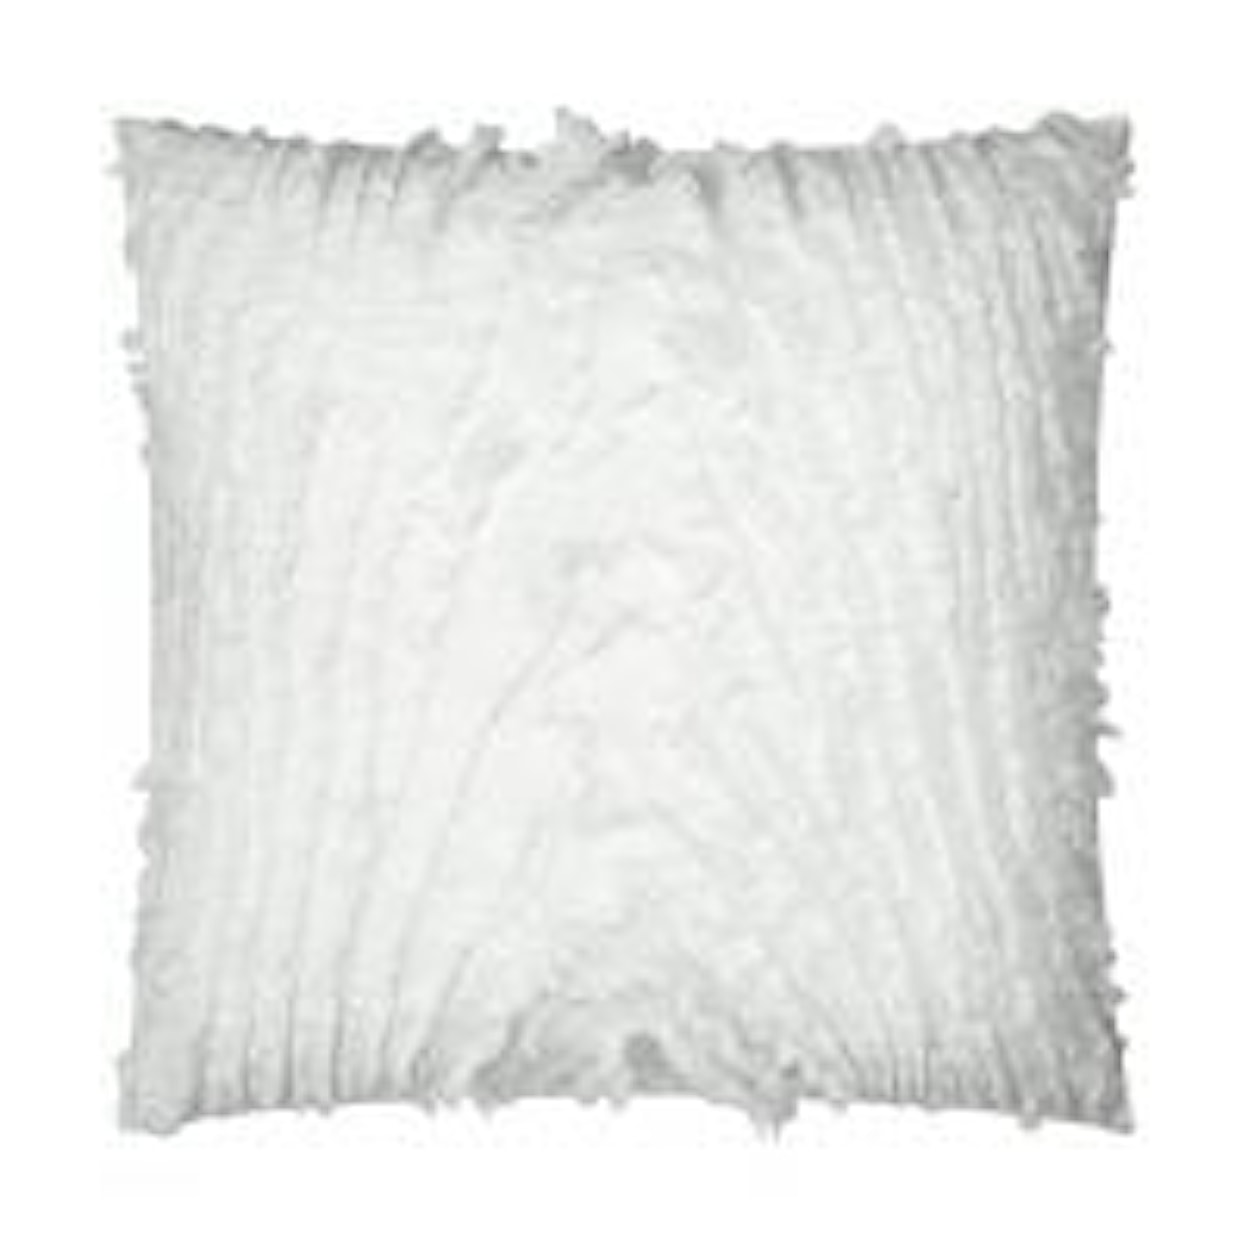 D.V. KAP Home Indoor Pillows STRATUS 24"X24" DOWN PILLOW